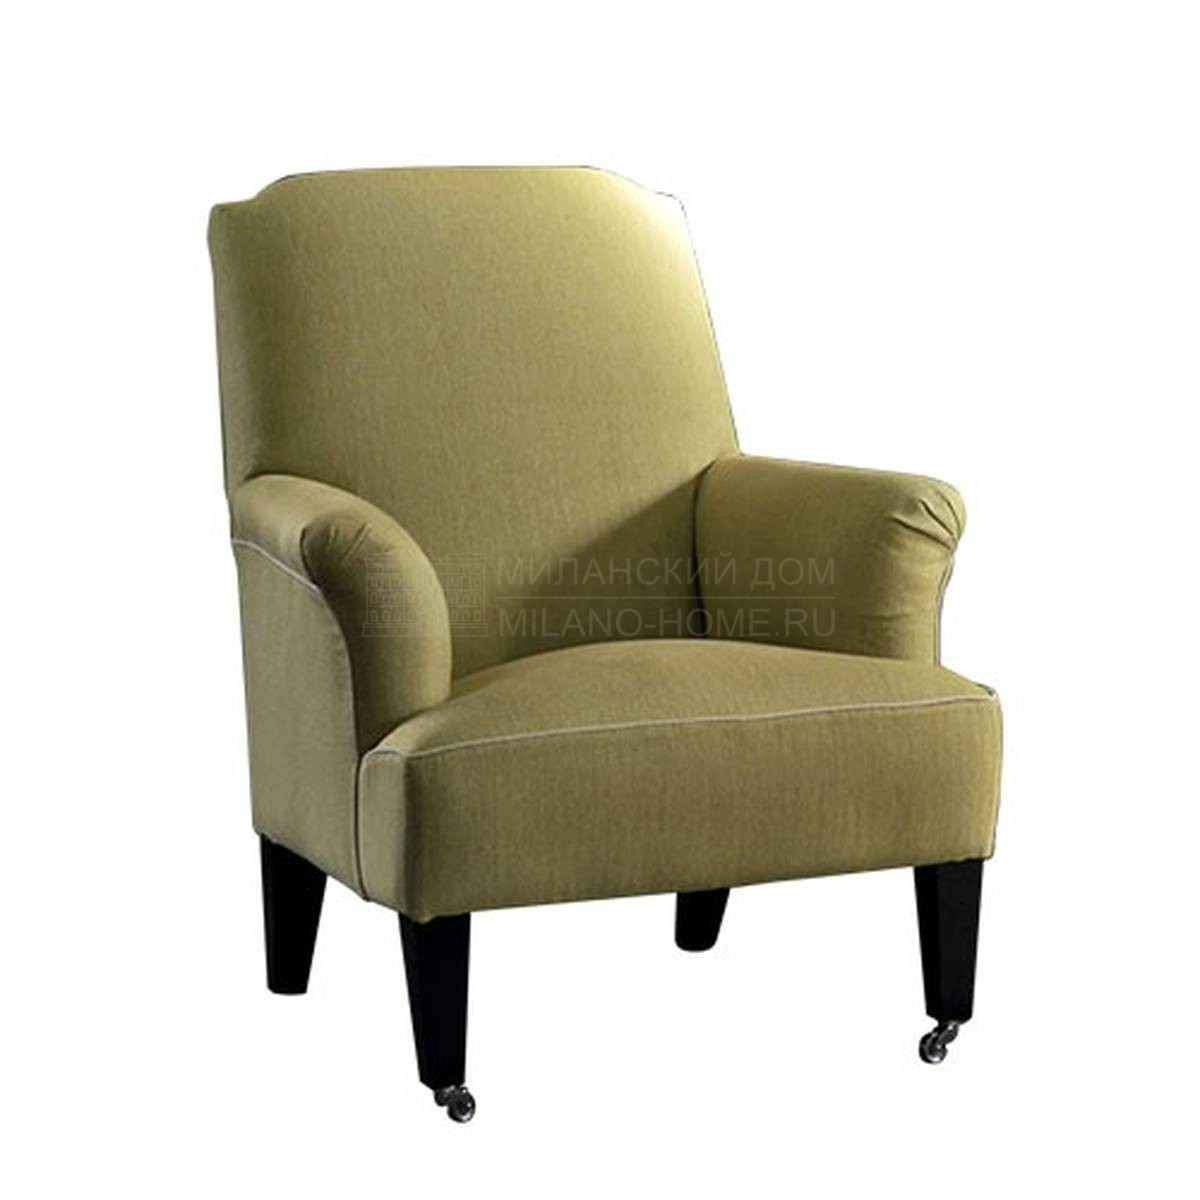 Кресло Iride/ armchair из Италии фабрики SOFTHOUSE